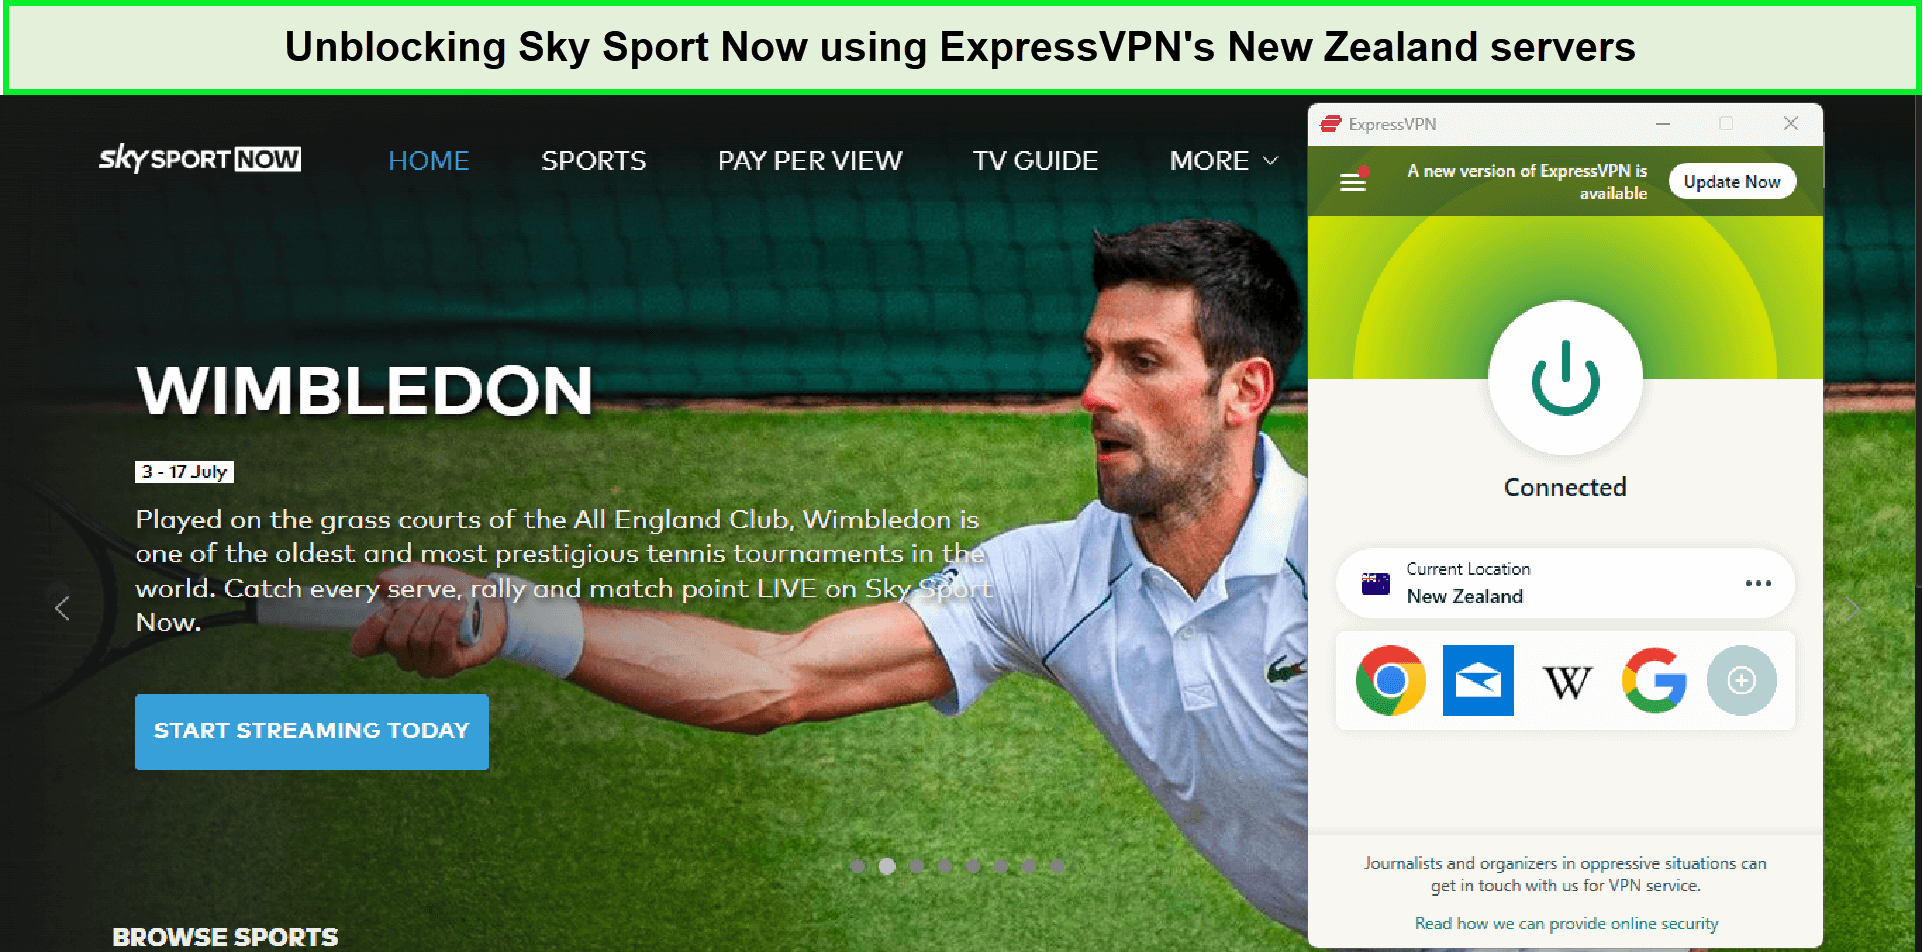 sky-sport-now-in-New Zealand-unblocked-by-expressvpn